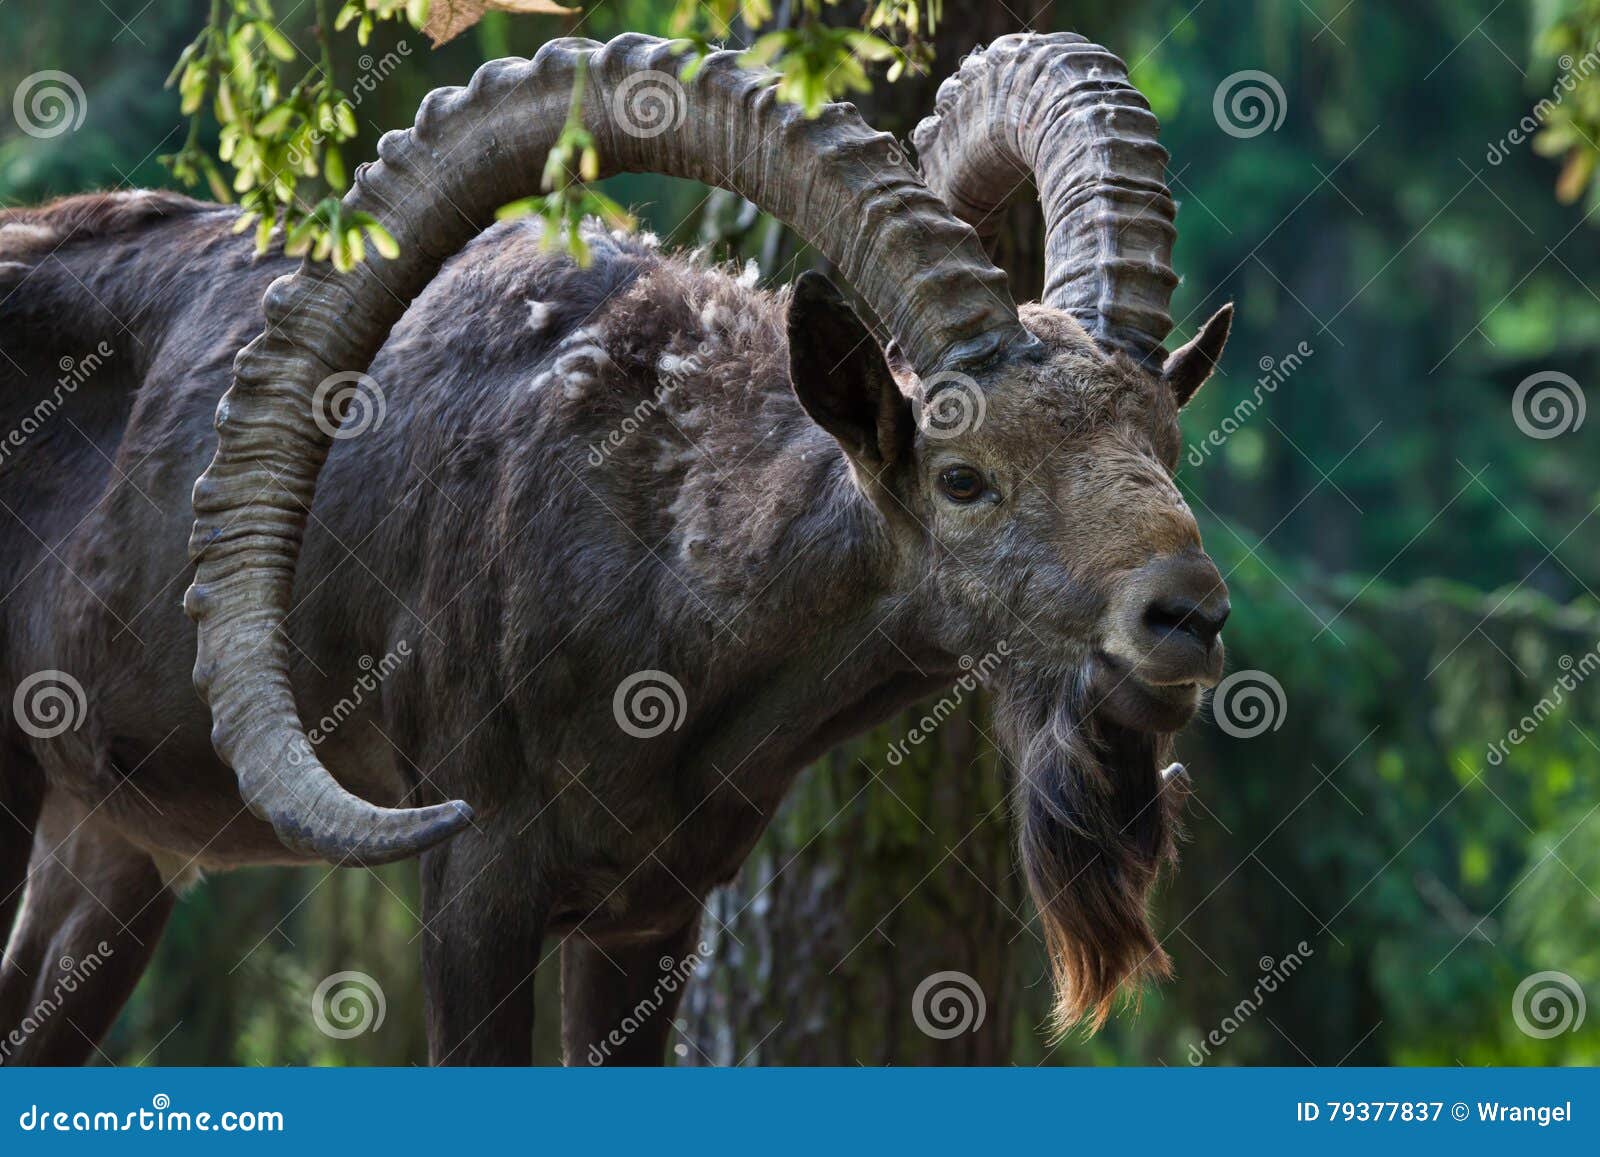 siberian ibex (capra sibirica).